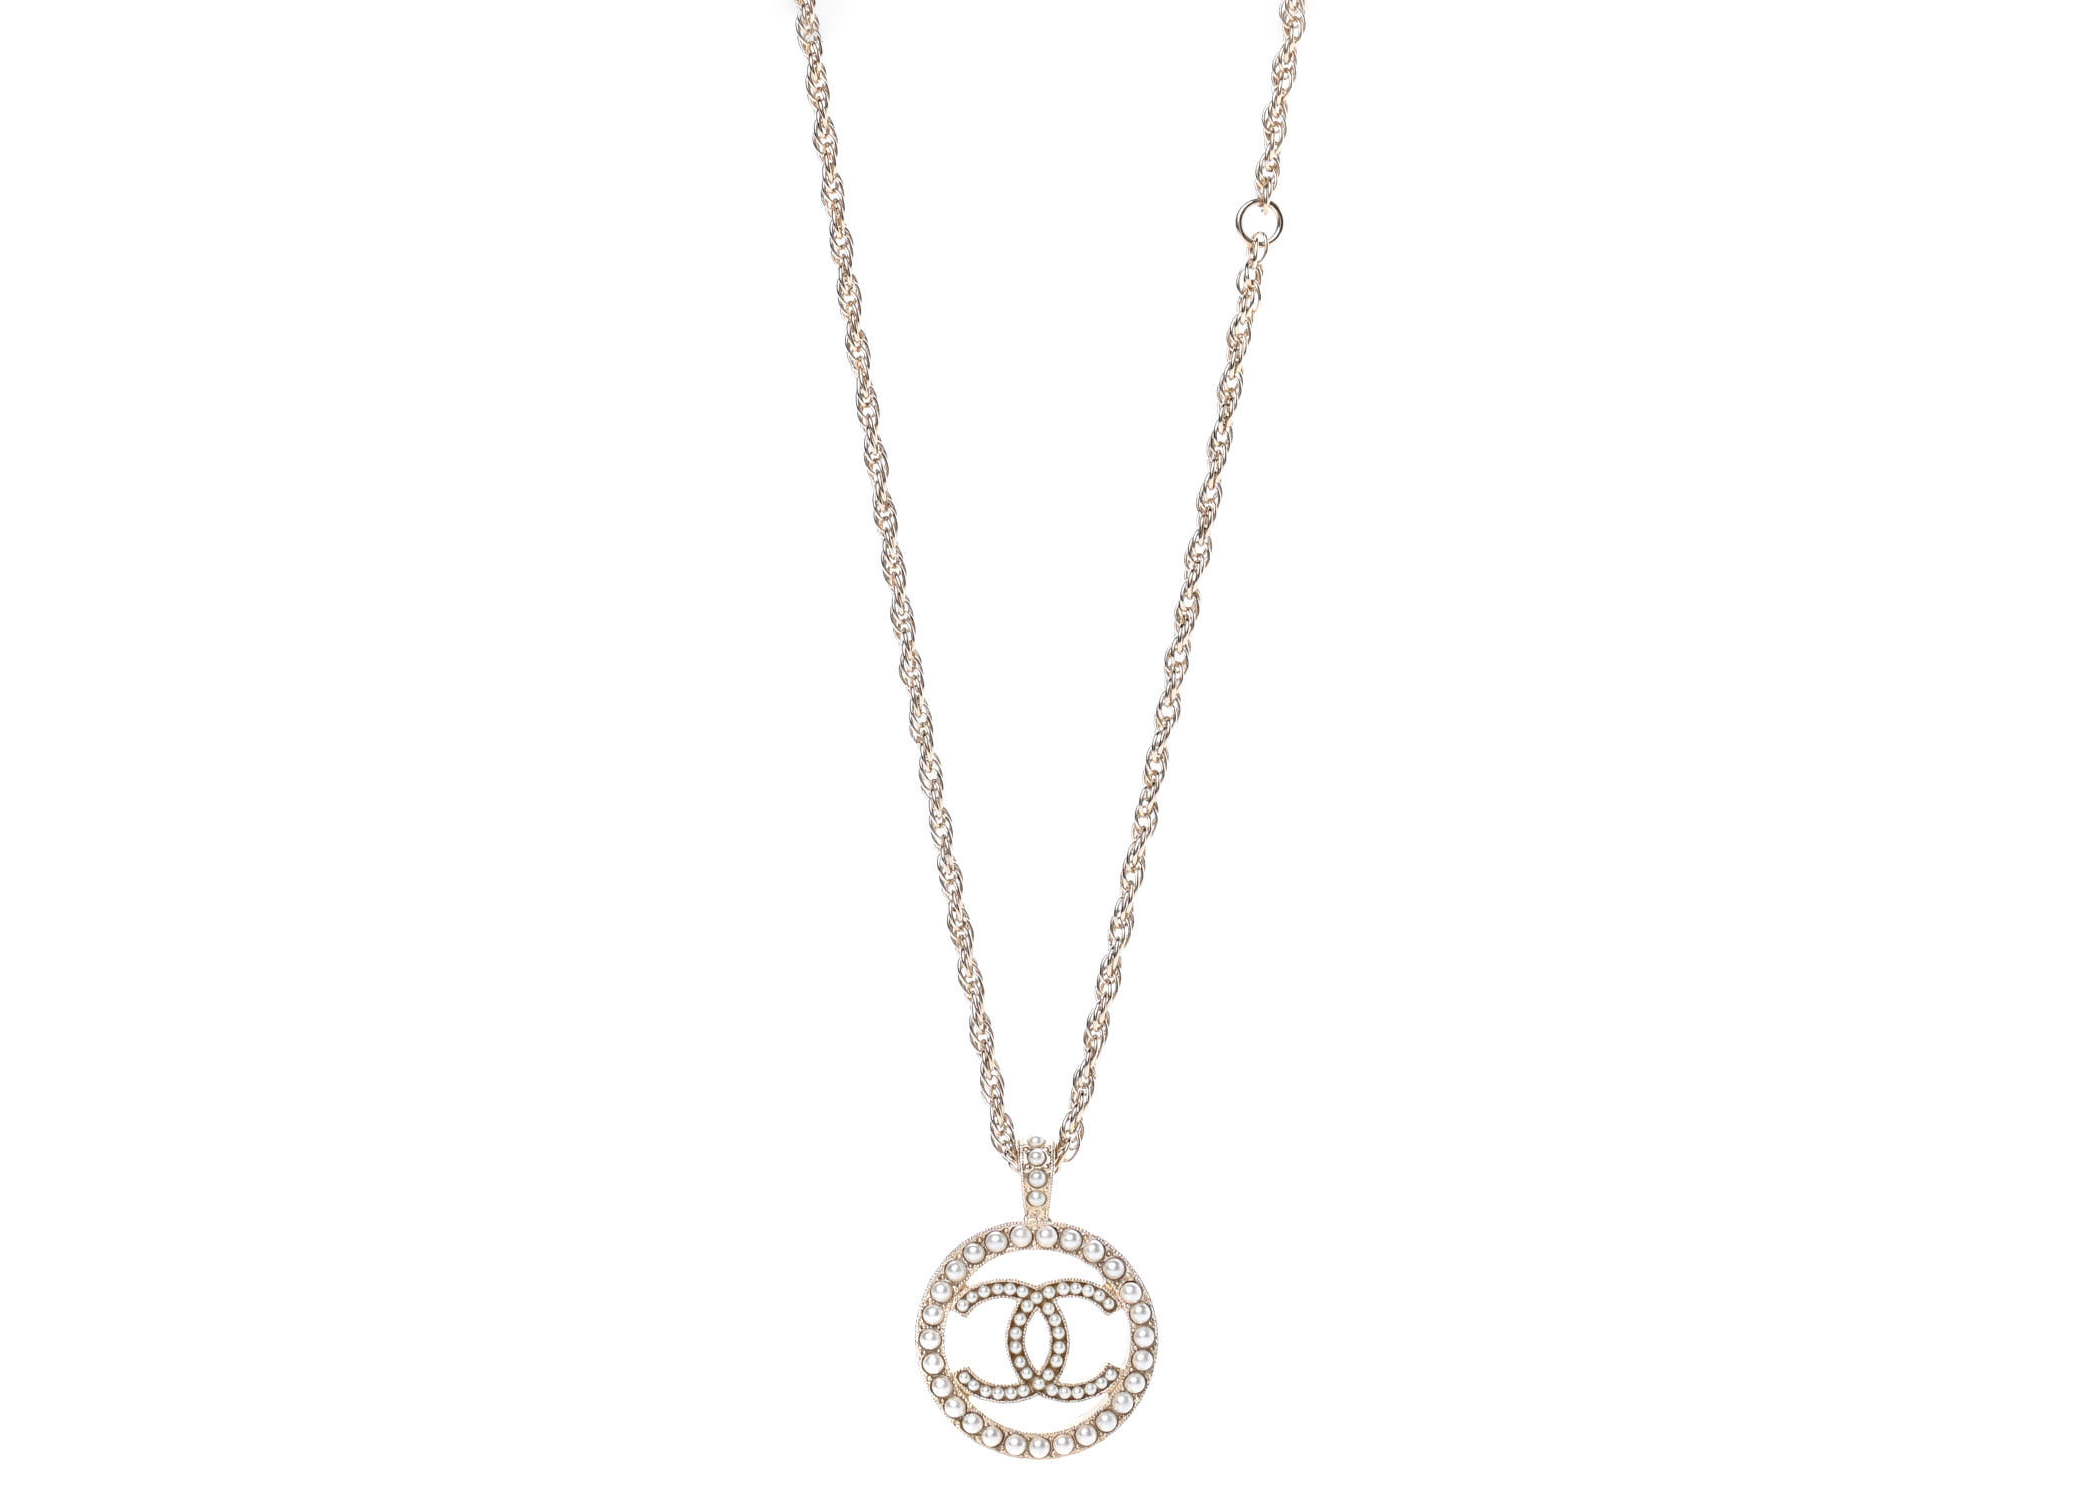 Chanel Jewelry  Heart Locket Gold Chain Necklace Black Size 0x0x0 New   Tradesy  Heart jewelry Buy necklace Gold chain necklace